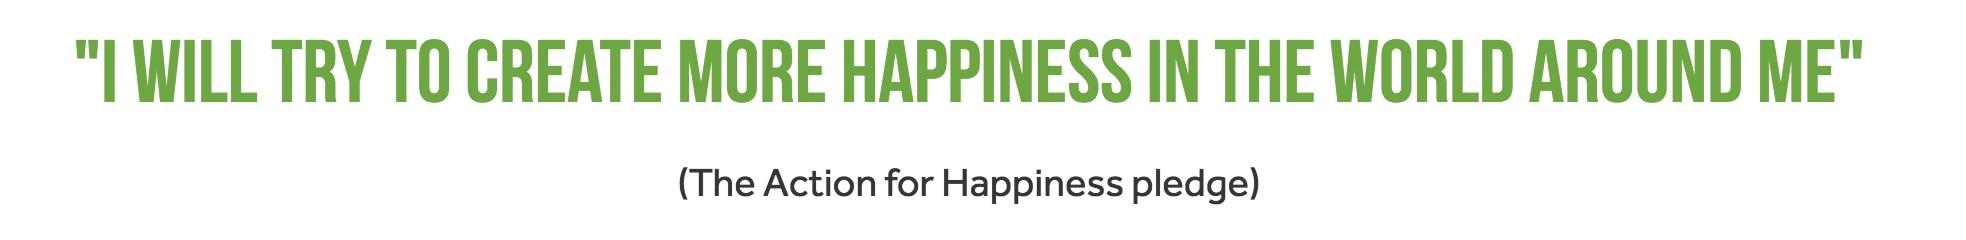 International Day of Happiness pledge